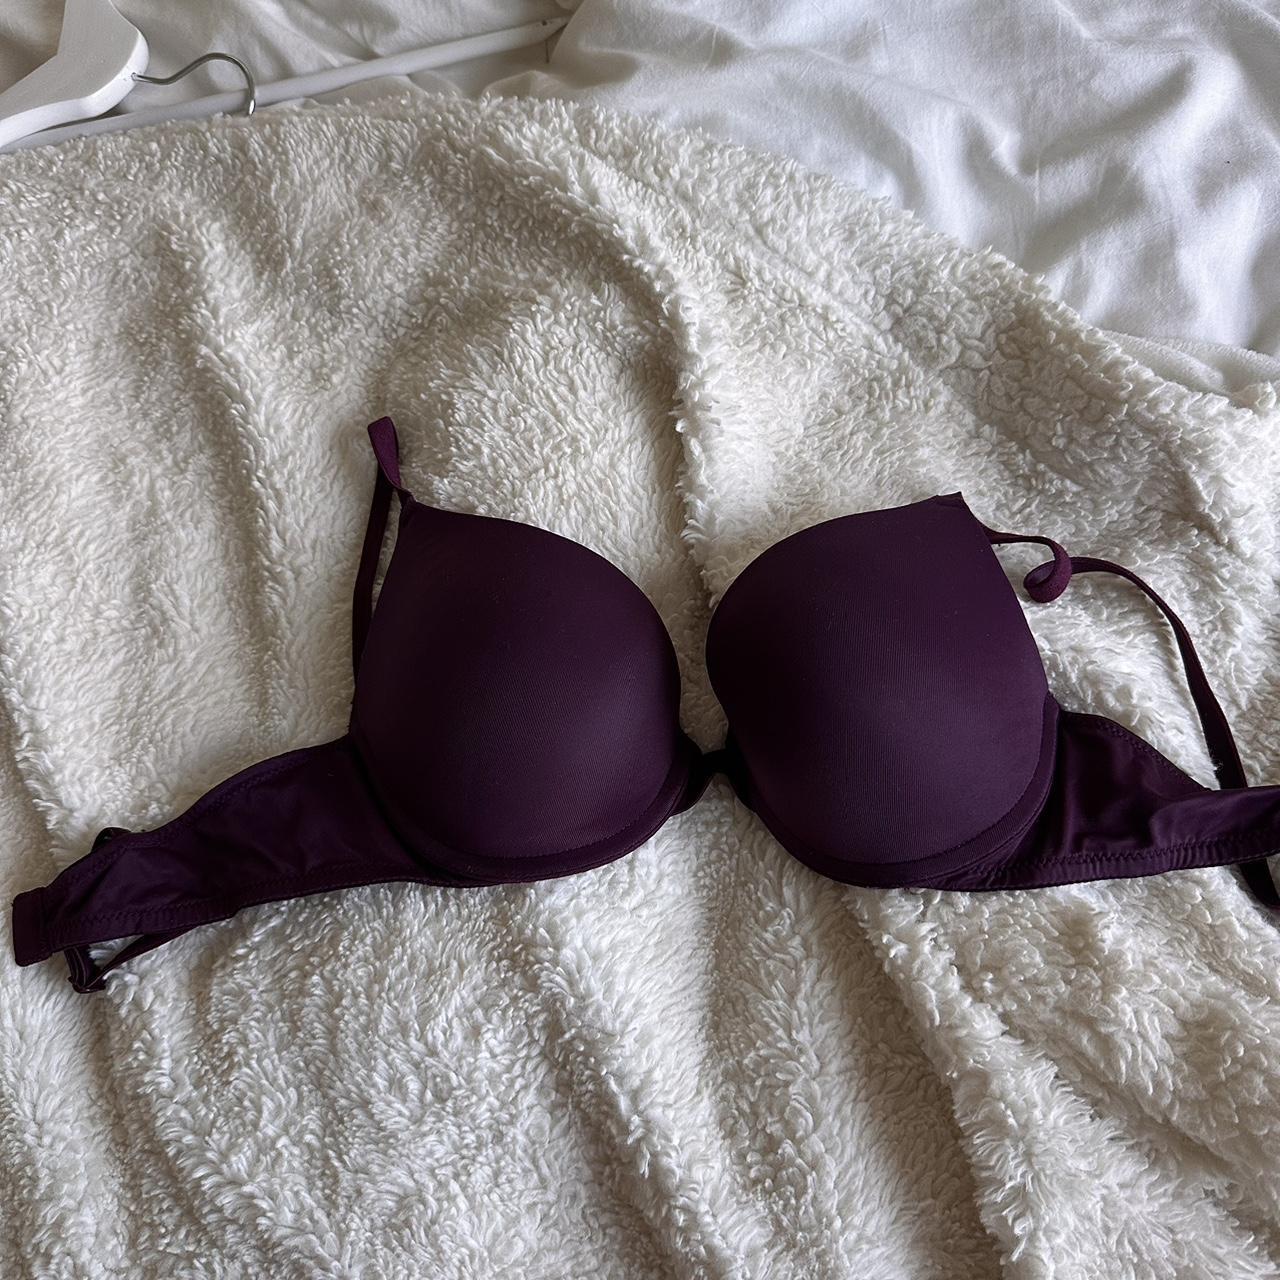 Bra, Victoria's Secret Bra size 32C